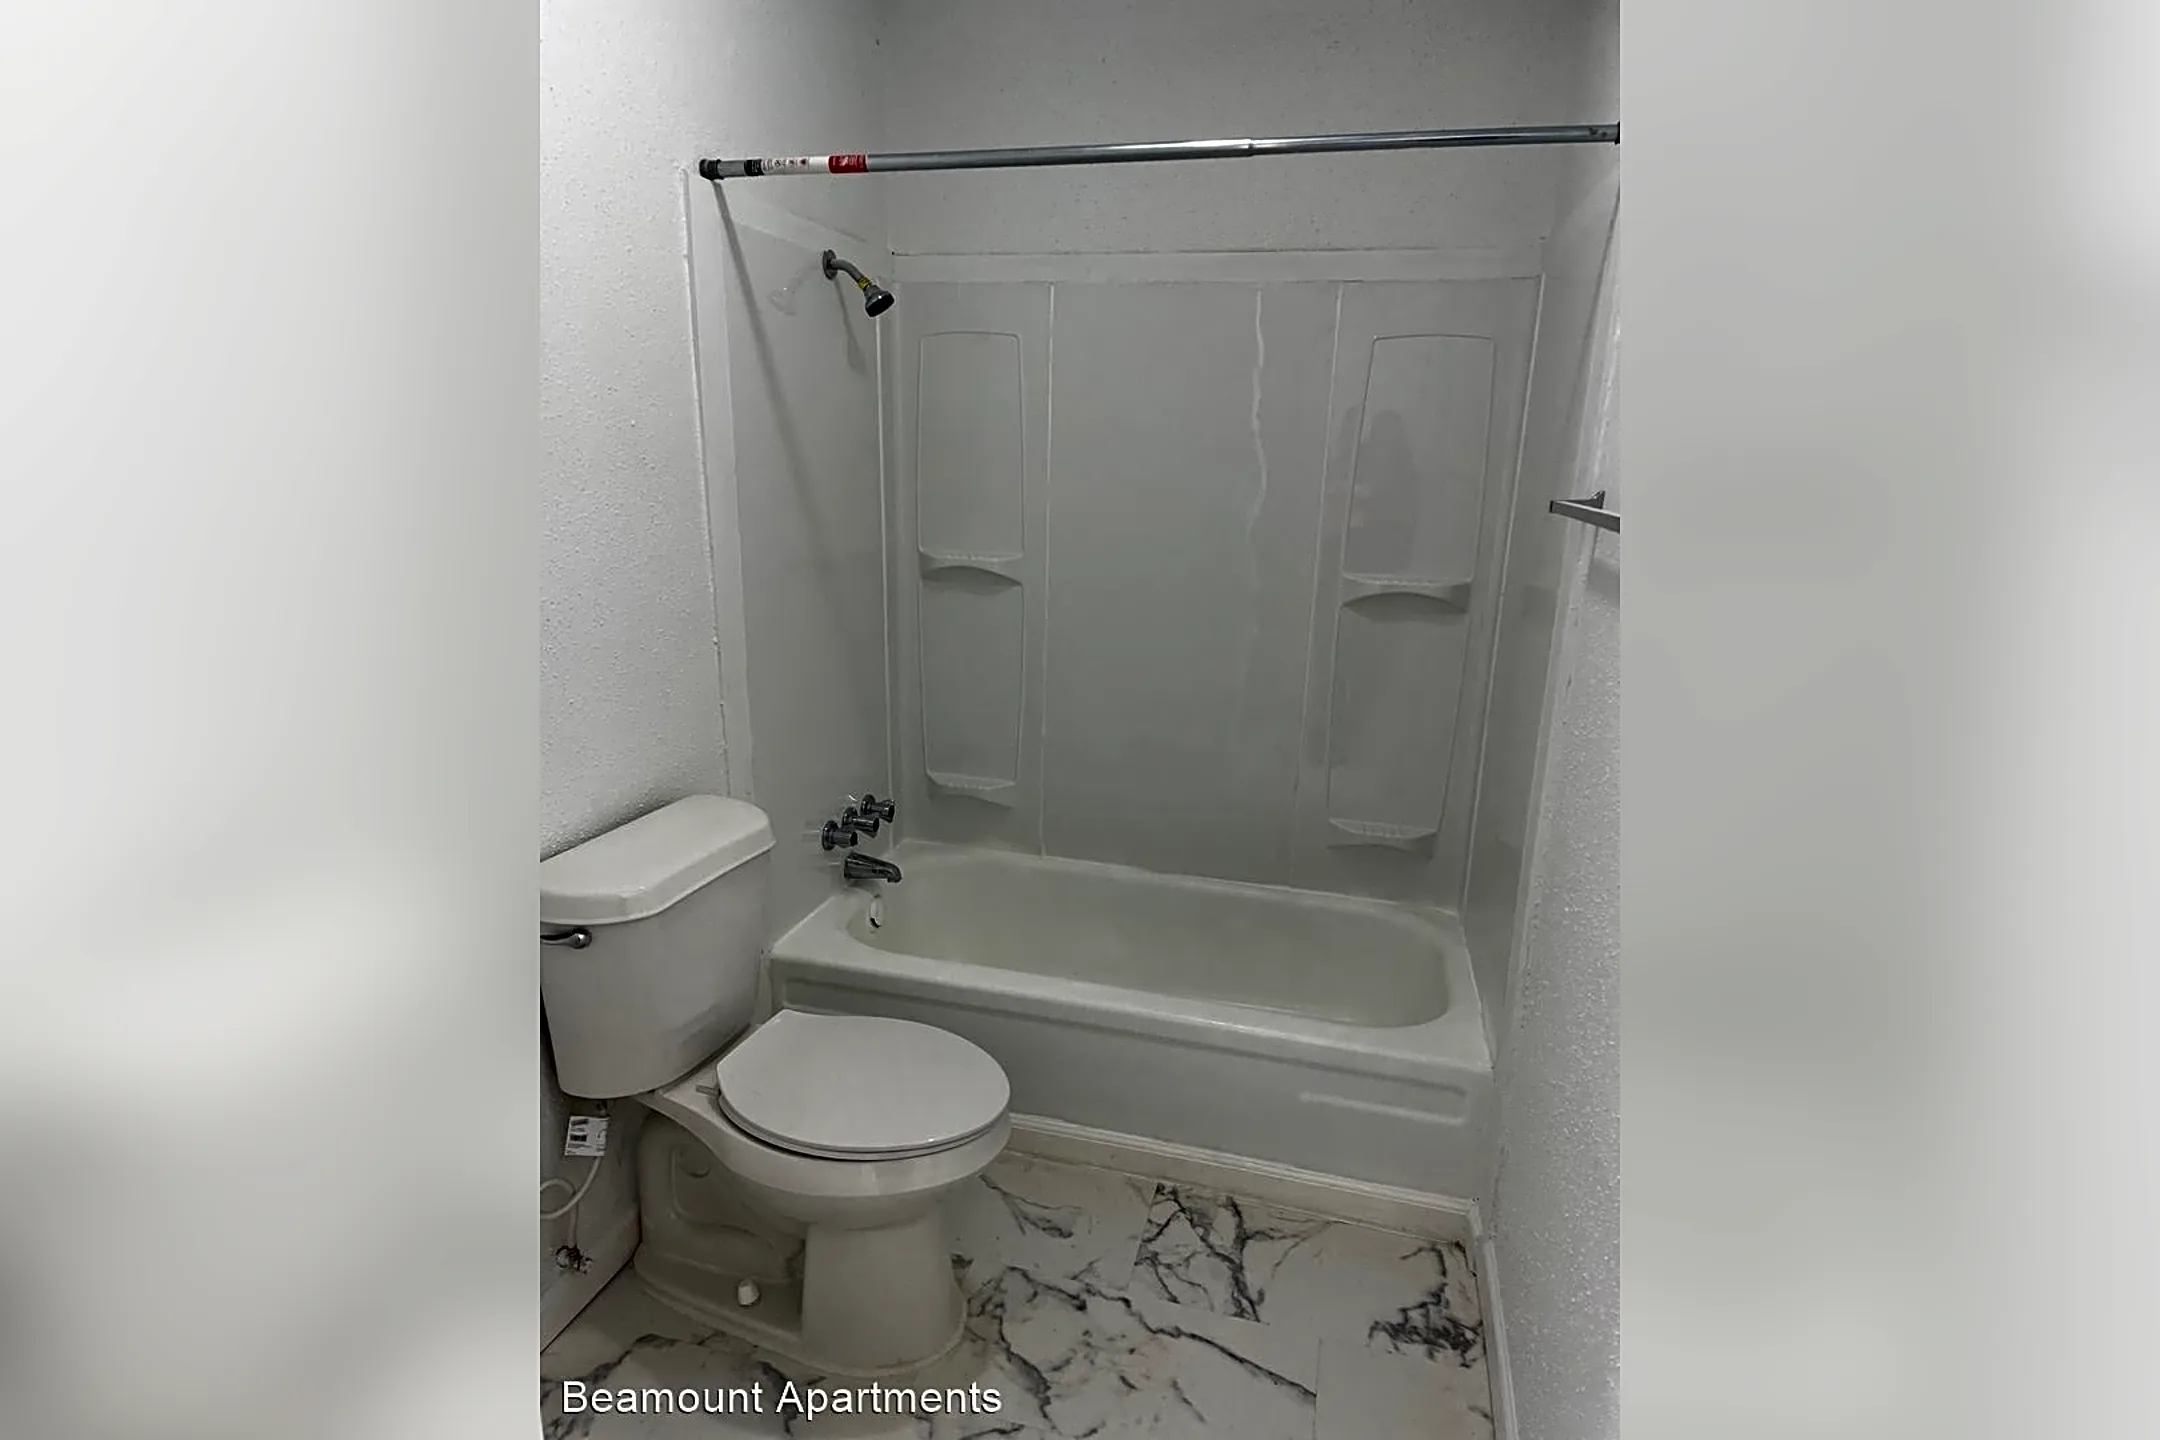 Bathroom - Beaumont Apartments - Beaumont, TX